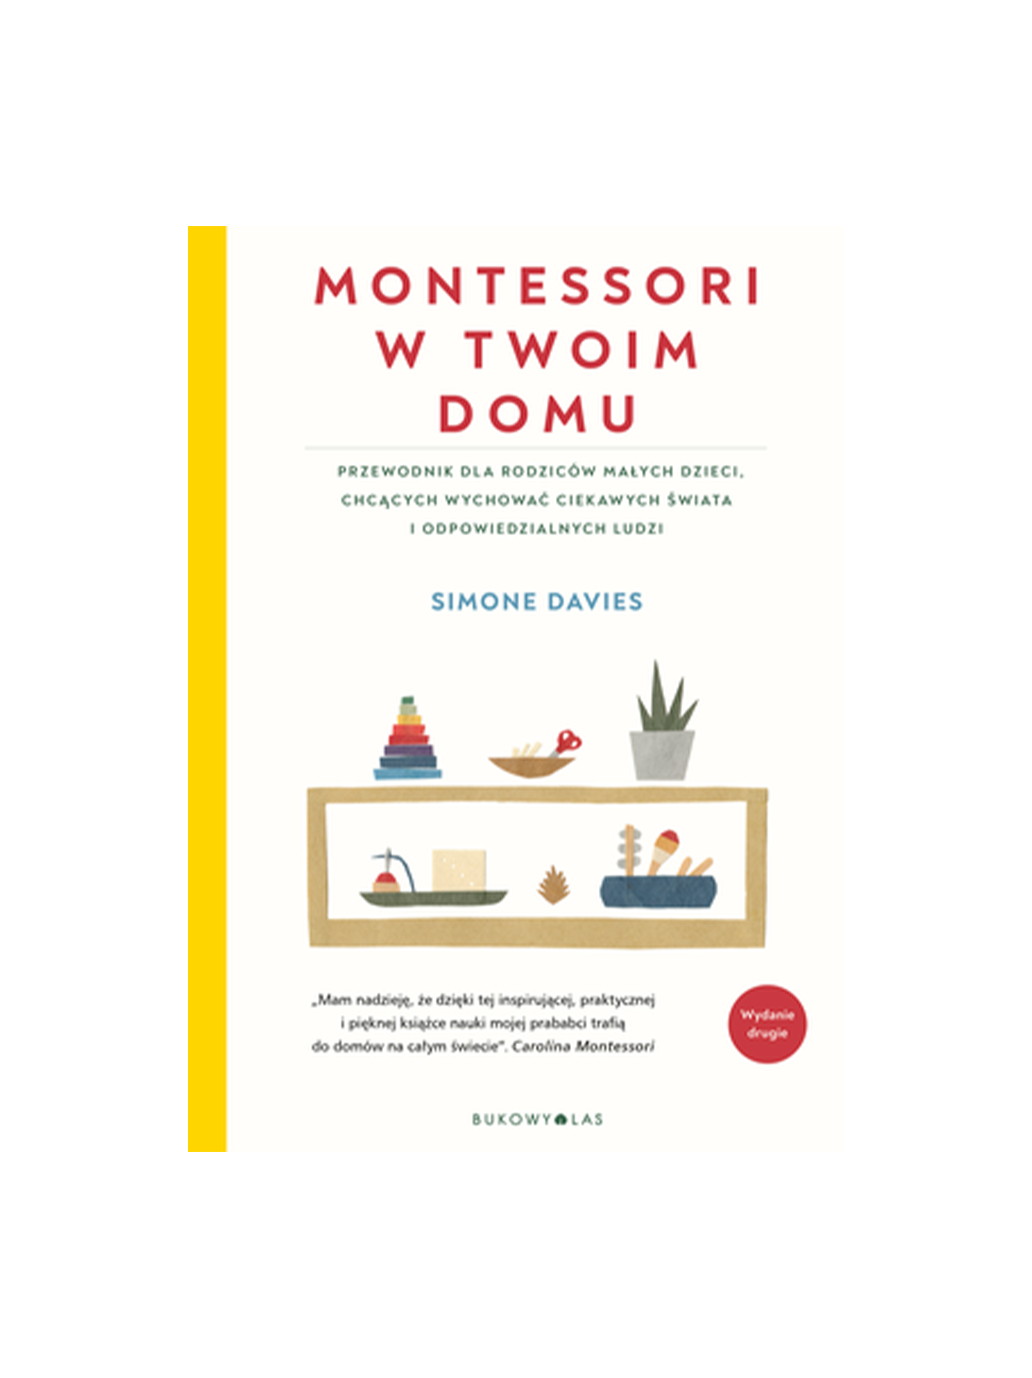 Montessori avec Twoim domu